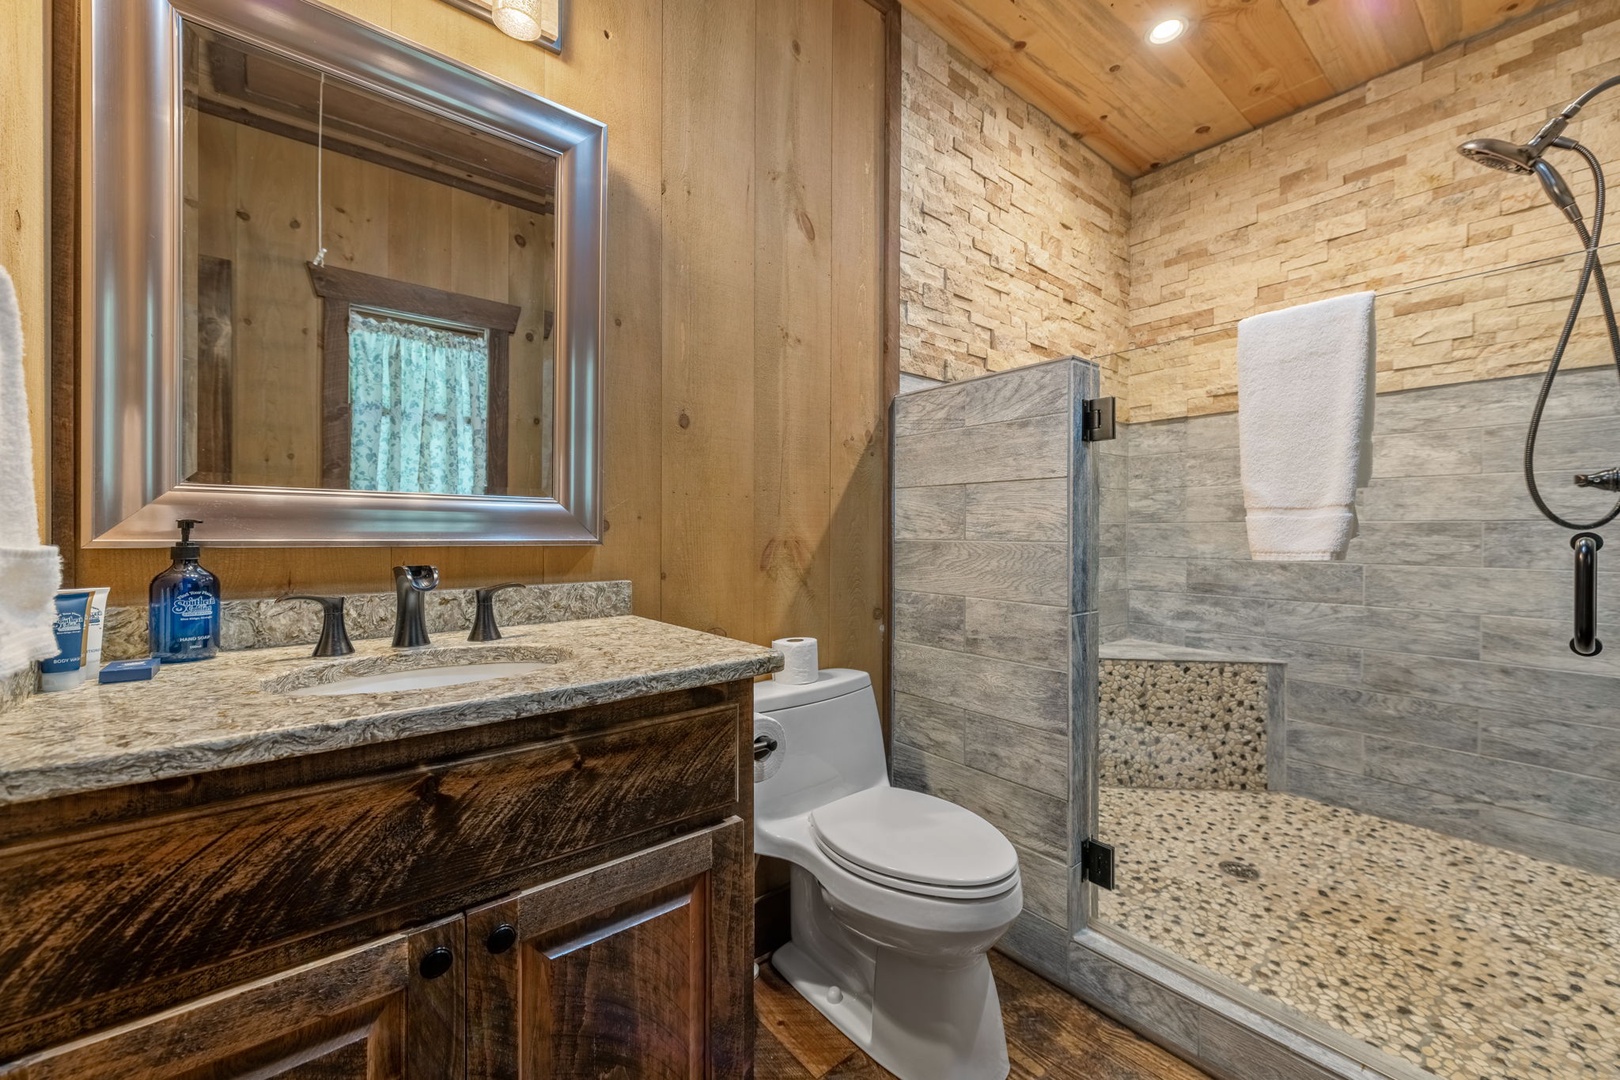 Indian Creek Lodge - King Bedroom Suite #1's Bathroom